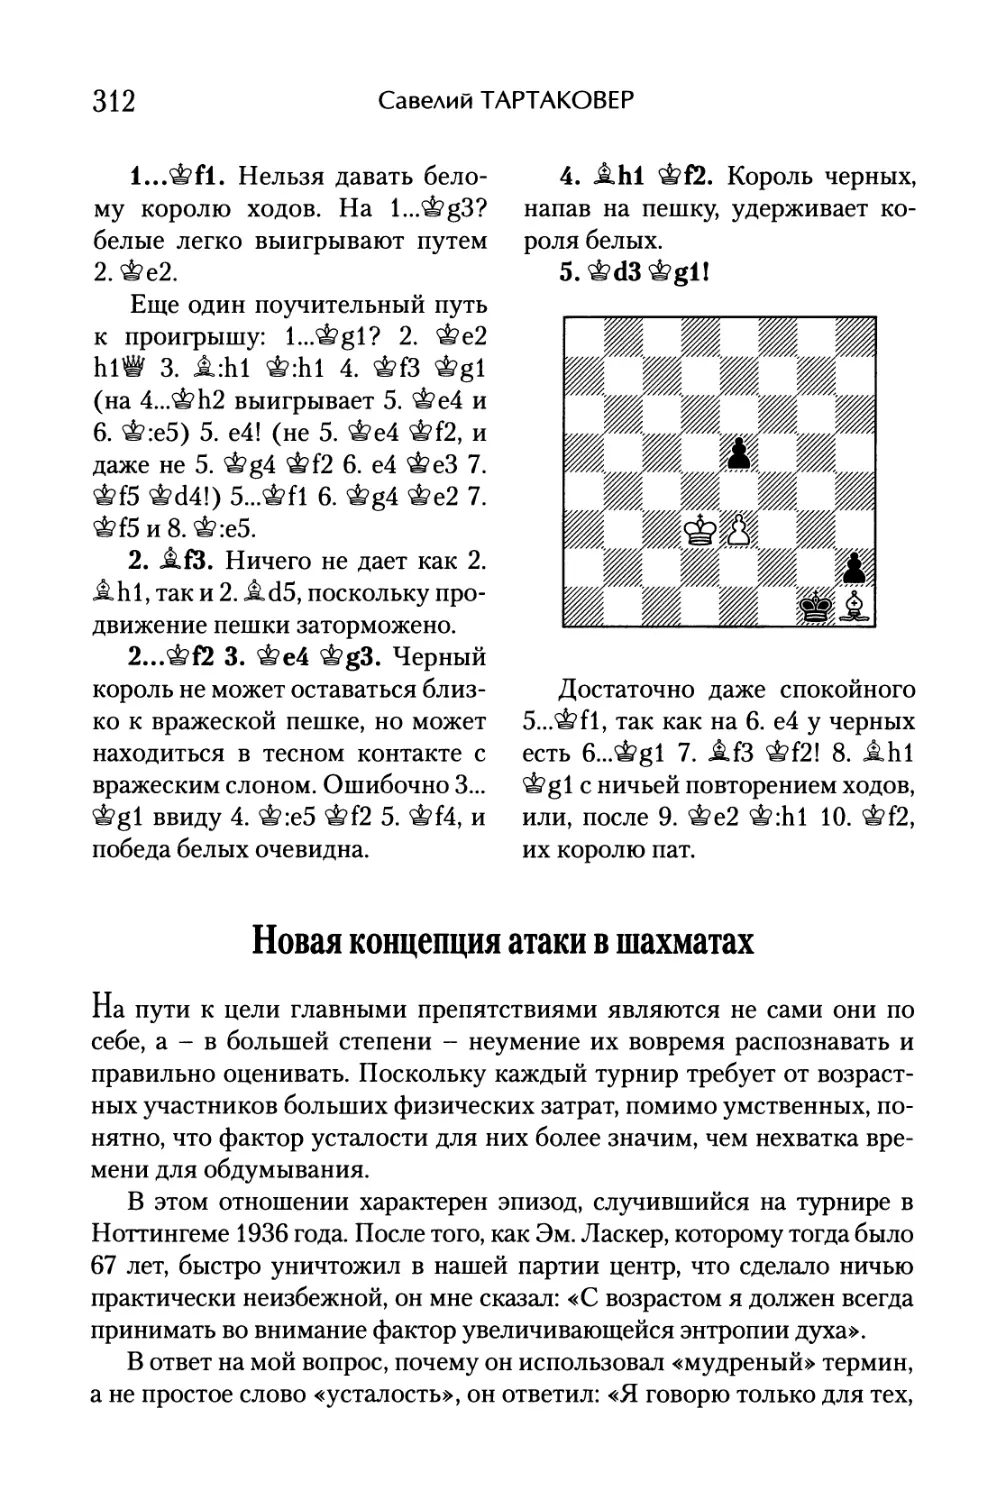 Новая концепция атаки в шахматах